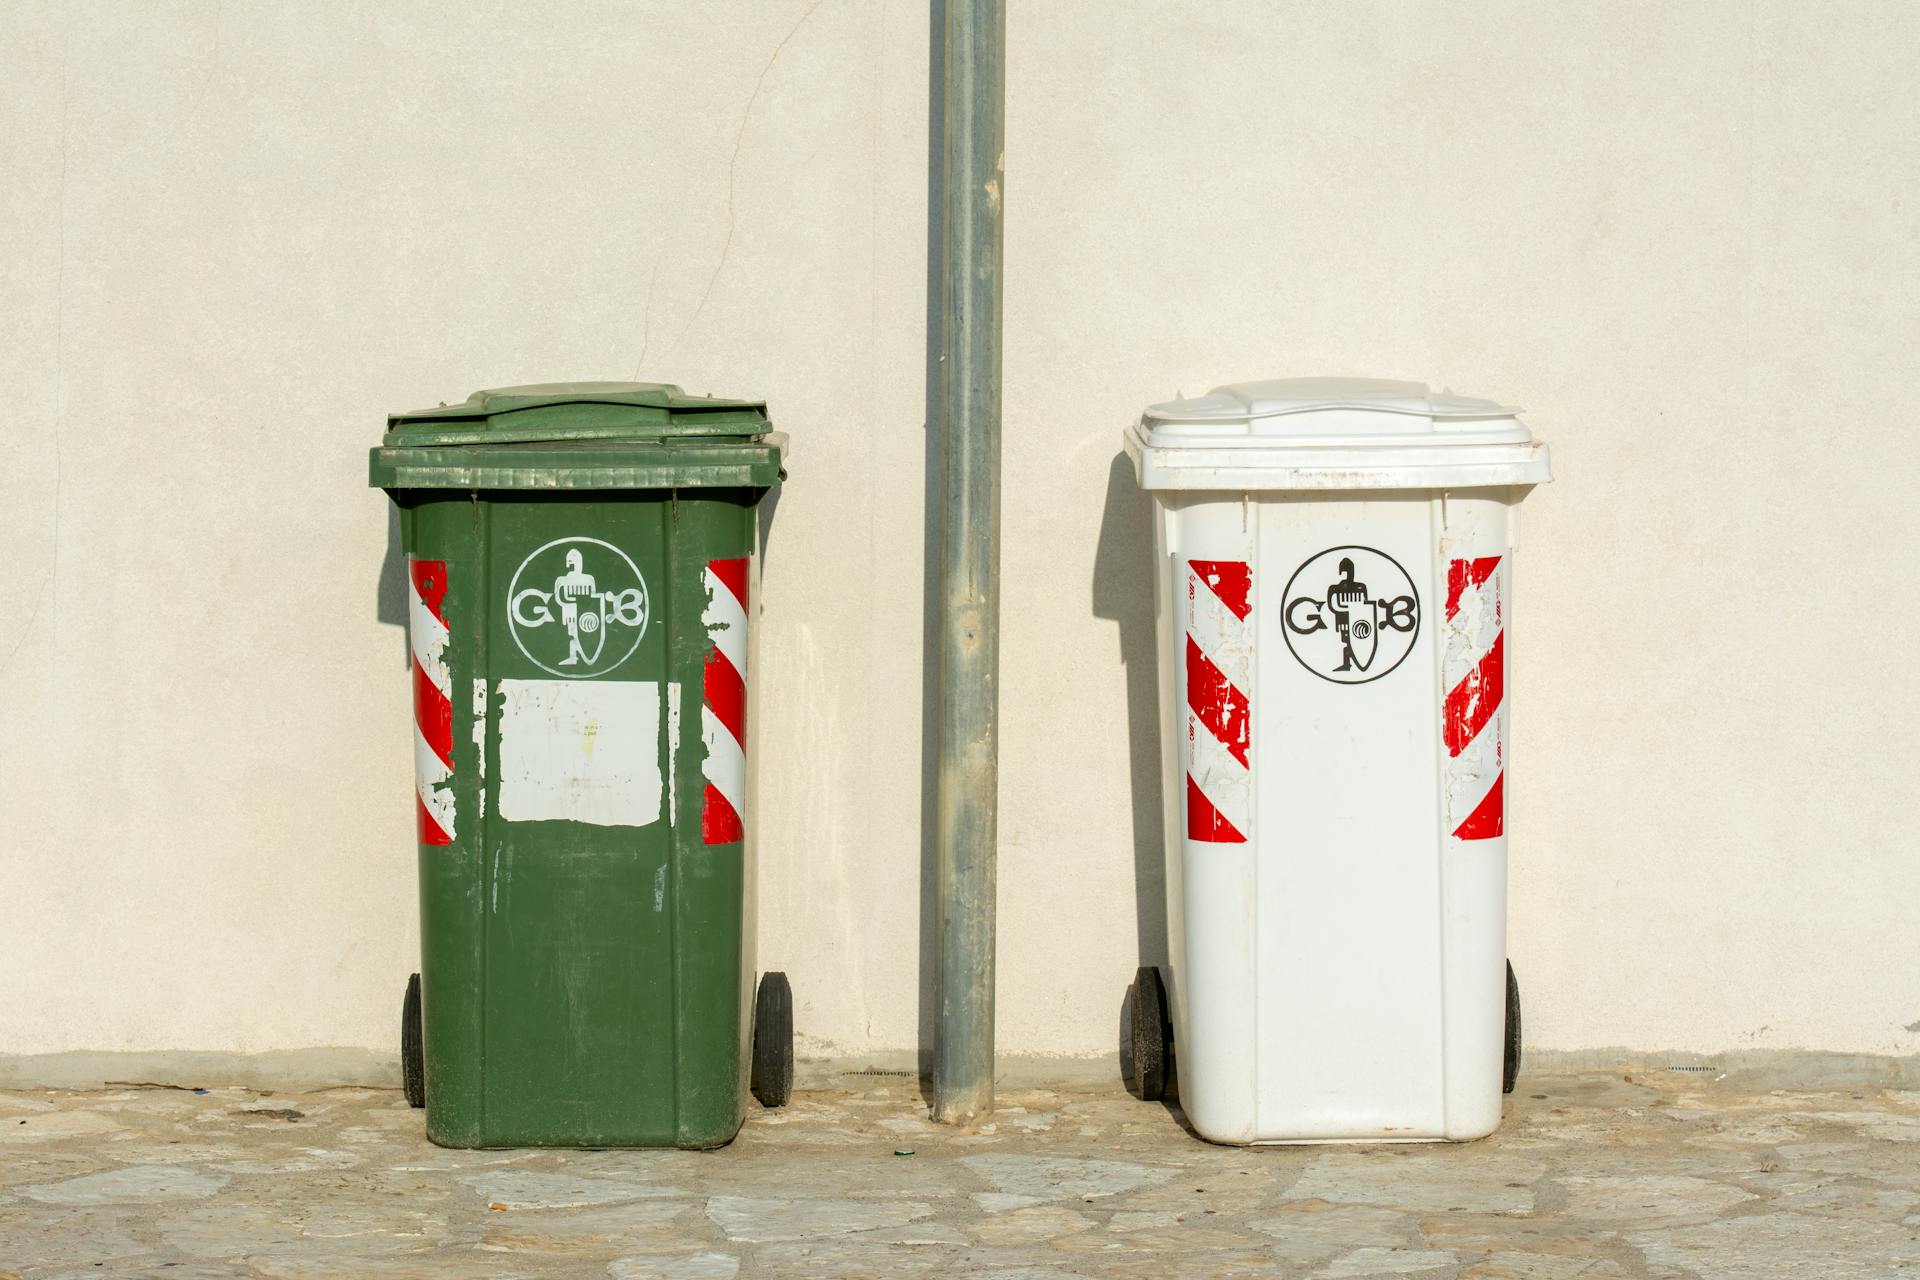 Mülltonnen im Freien | Quelle: Pexels